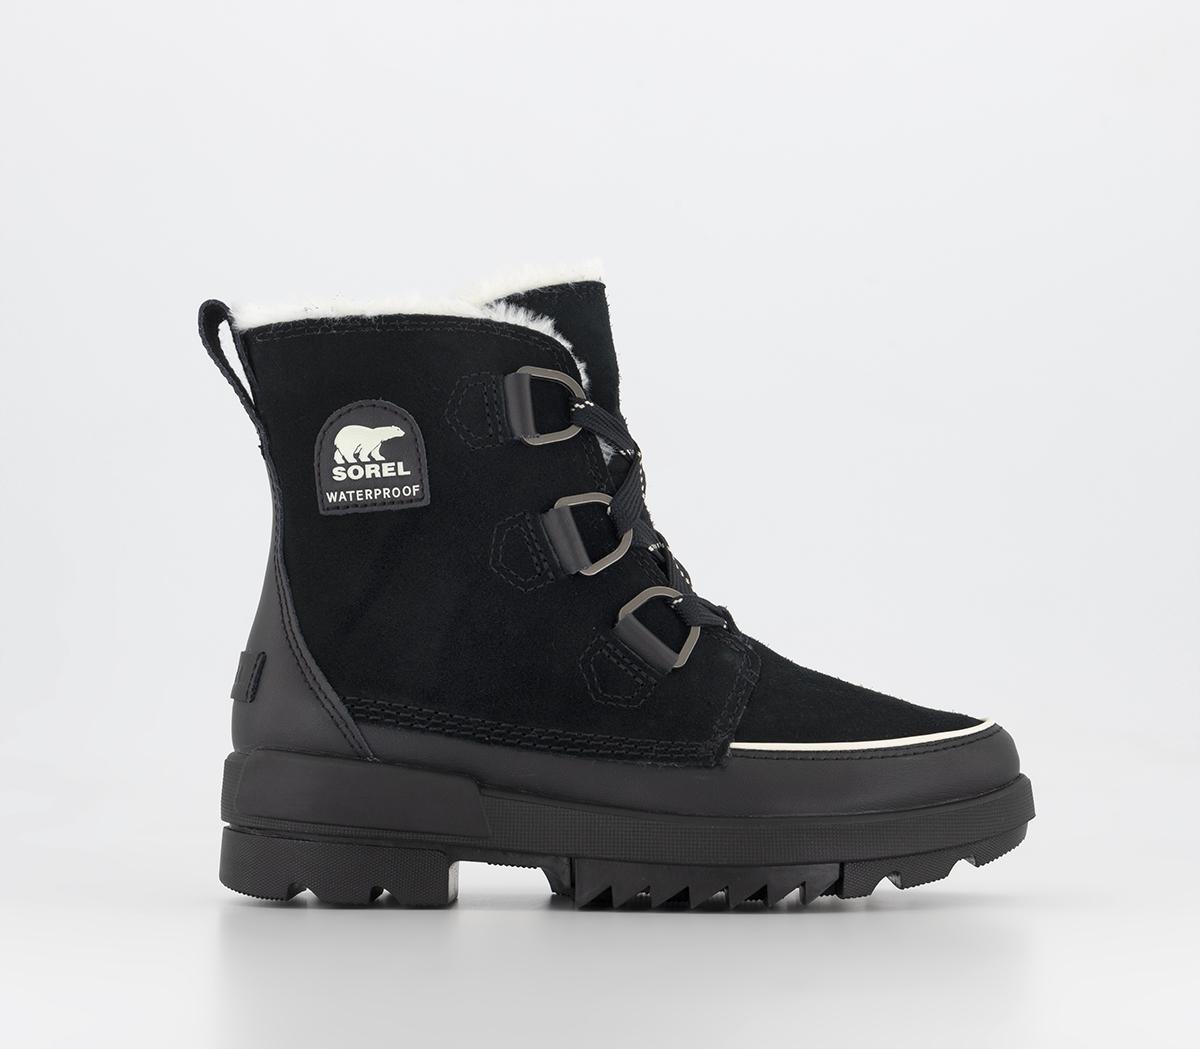 SorelTorino II Sneaker bootsBlack